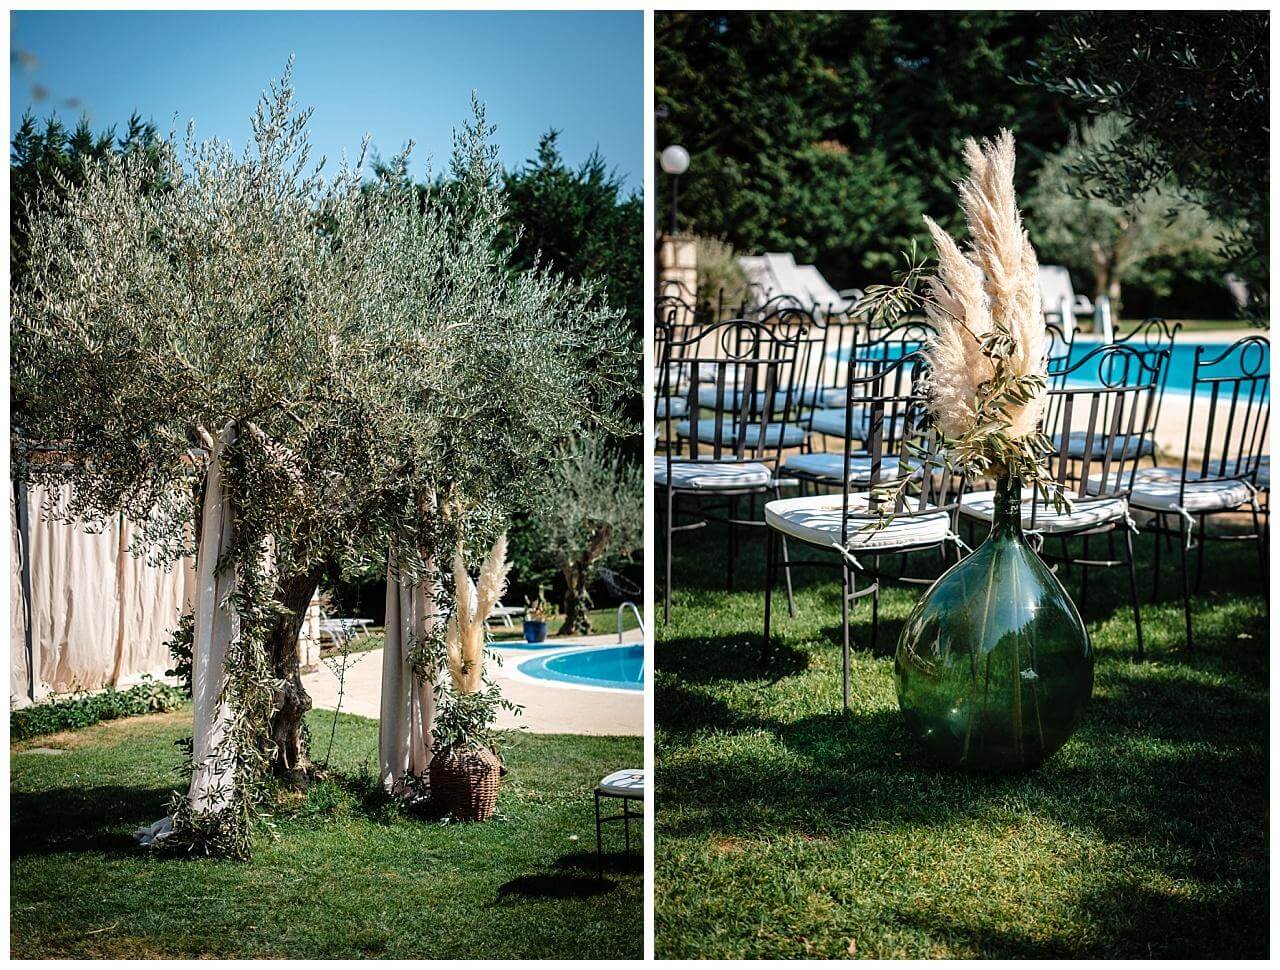 Arten von Traubögen in Kroatien - Olivenbaum Real Wedding Kroatien, wedding in croatia,hochzeitsplanerin kroatien, hochzeit in kroatien